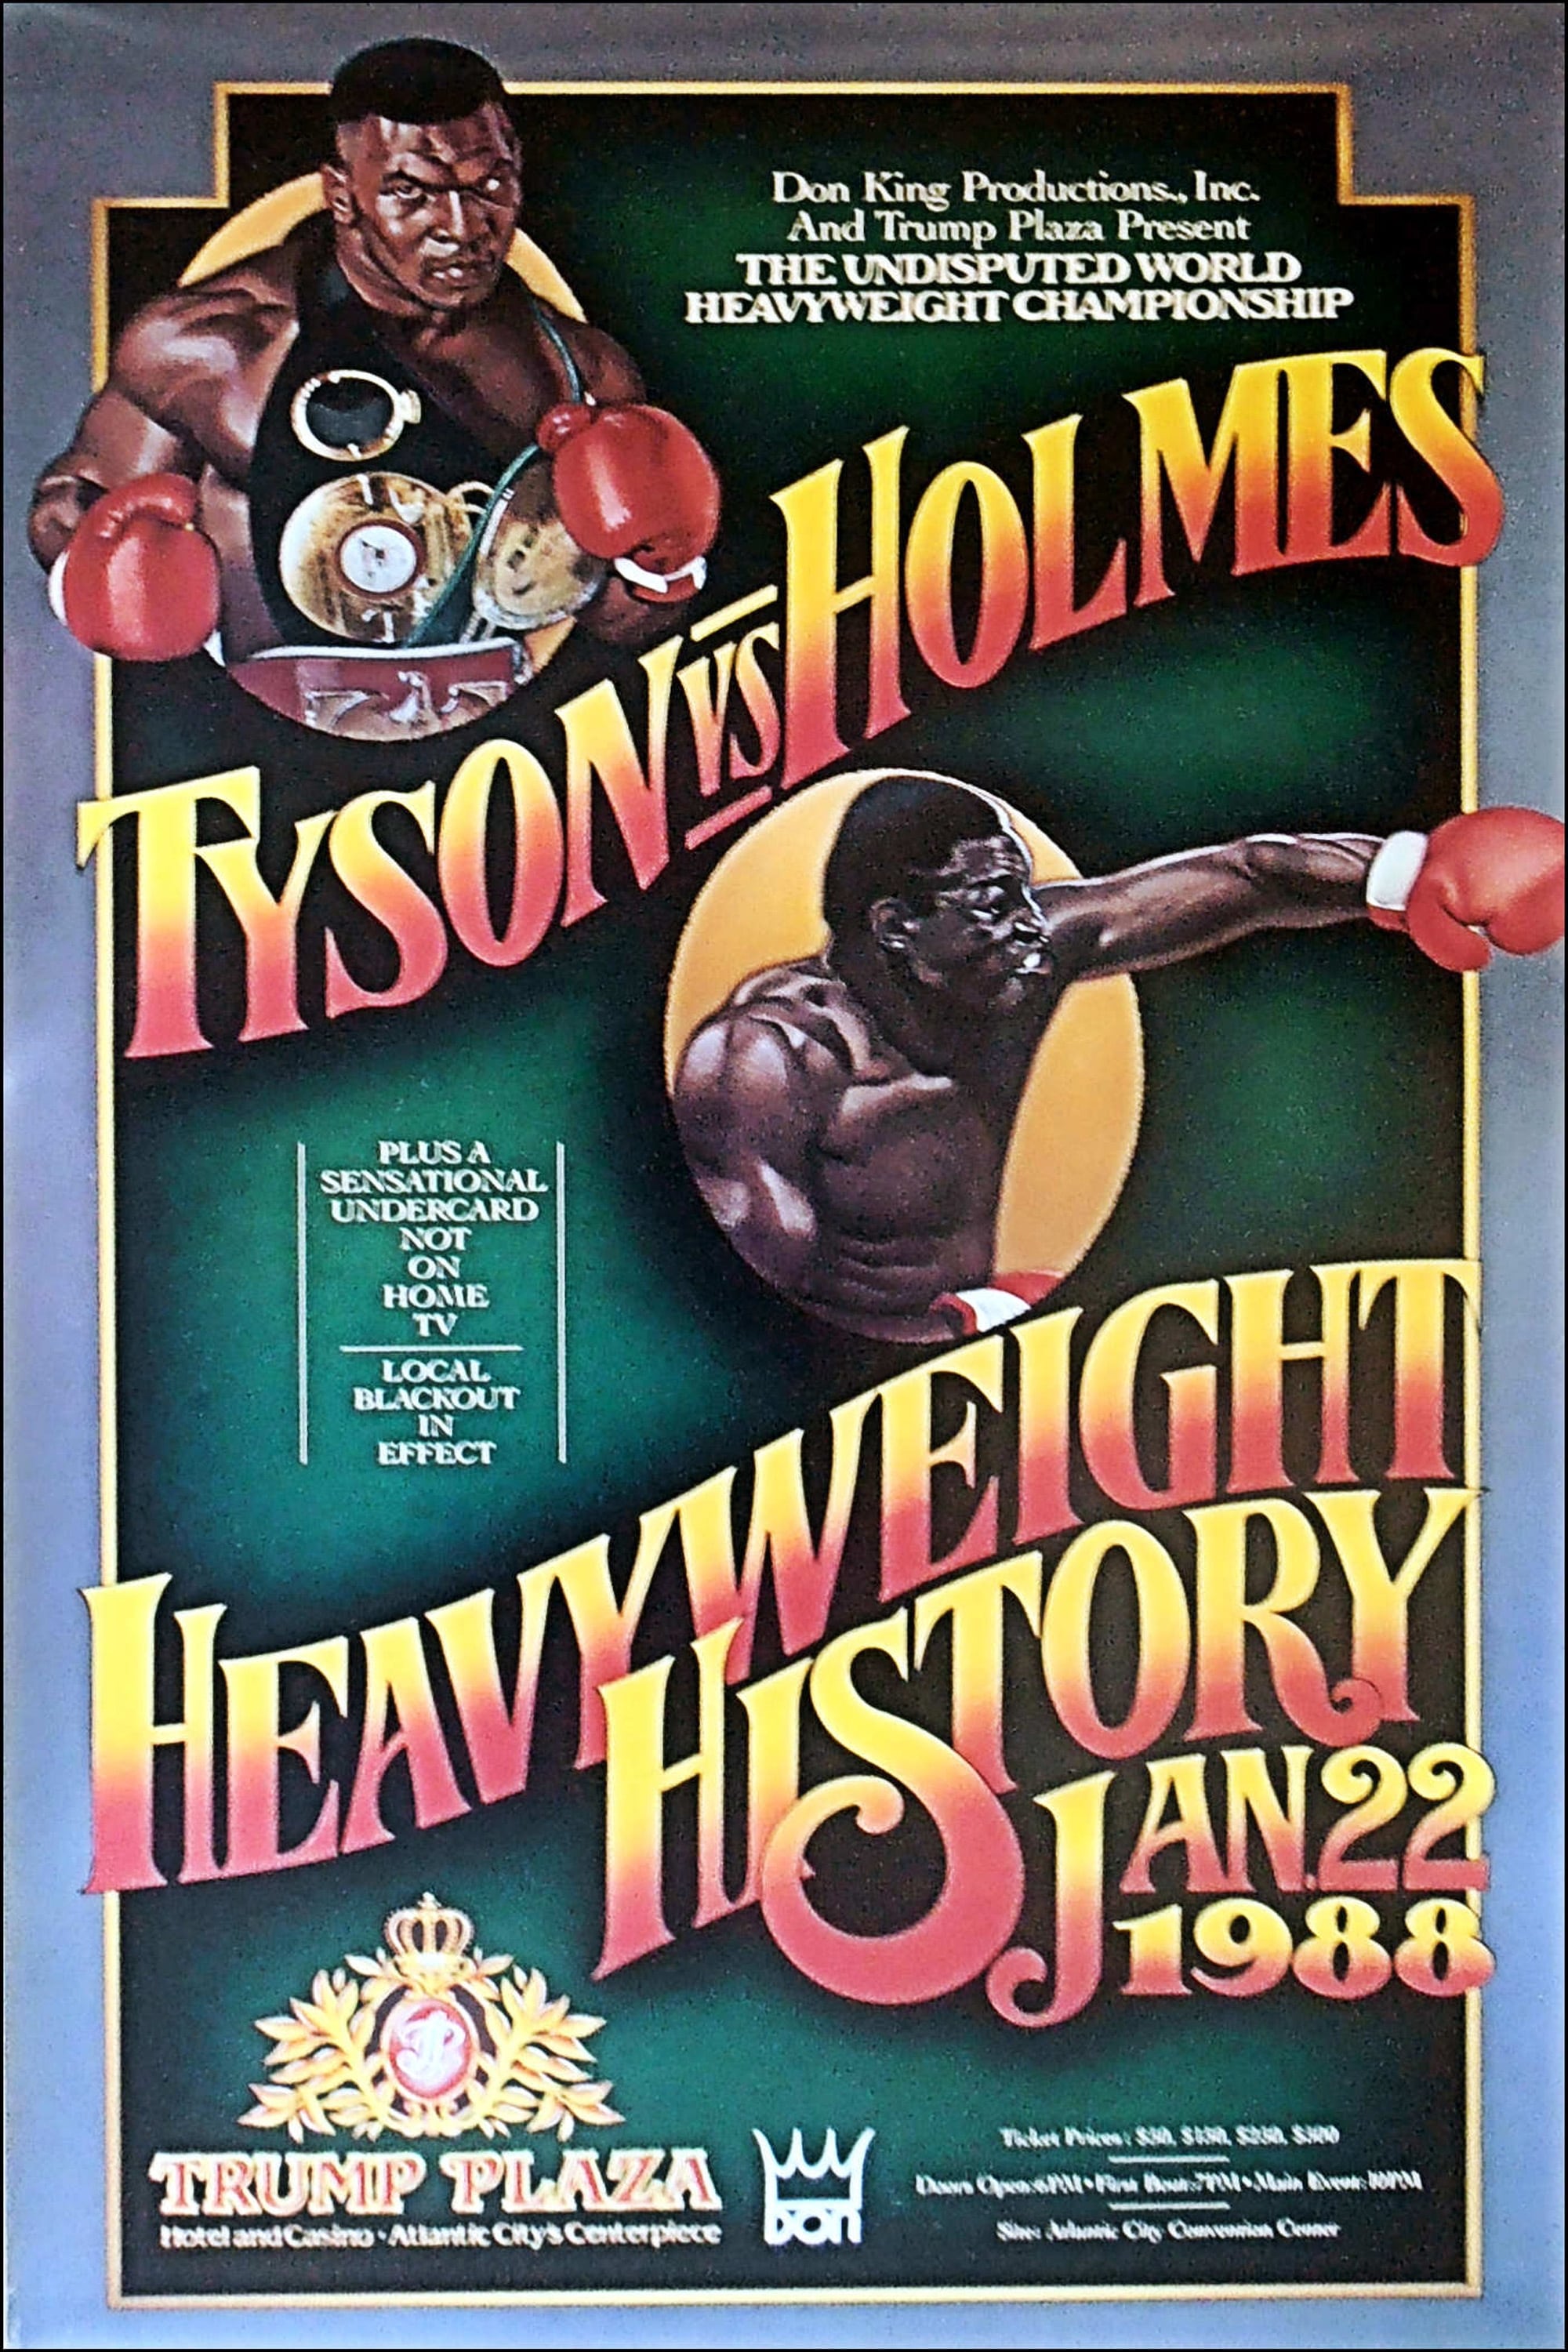 Mike Tyson vs Larry Holmes